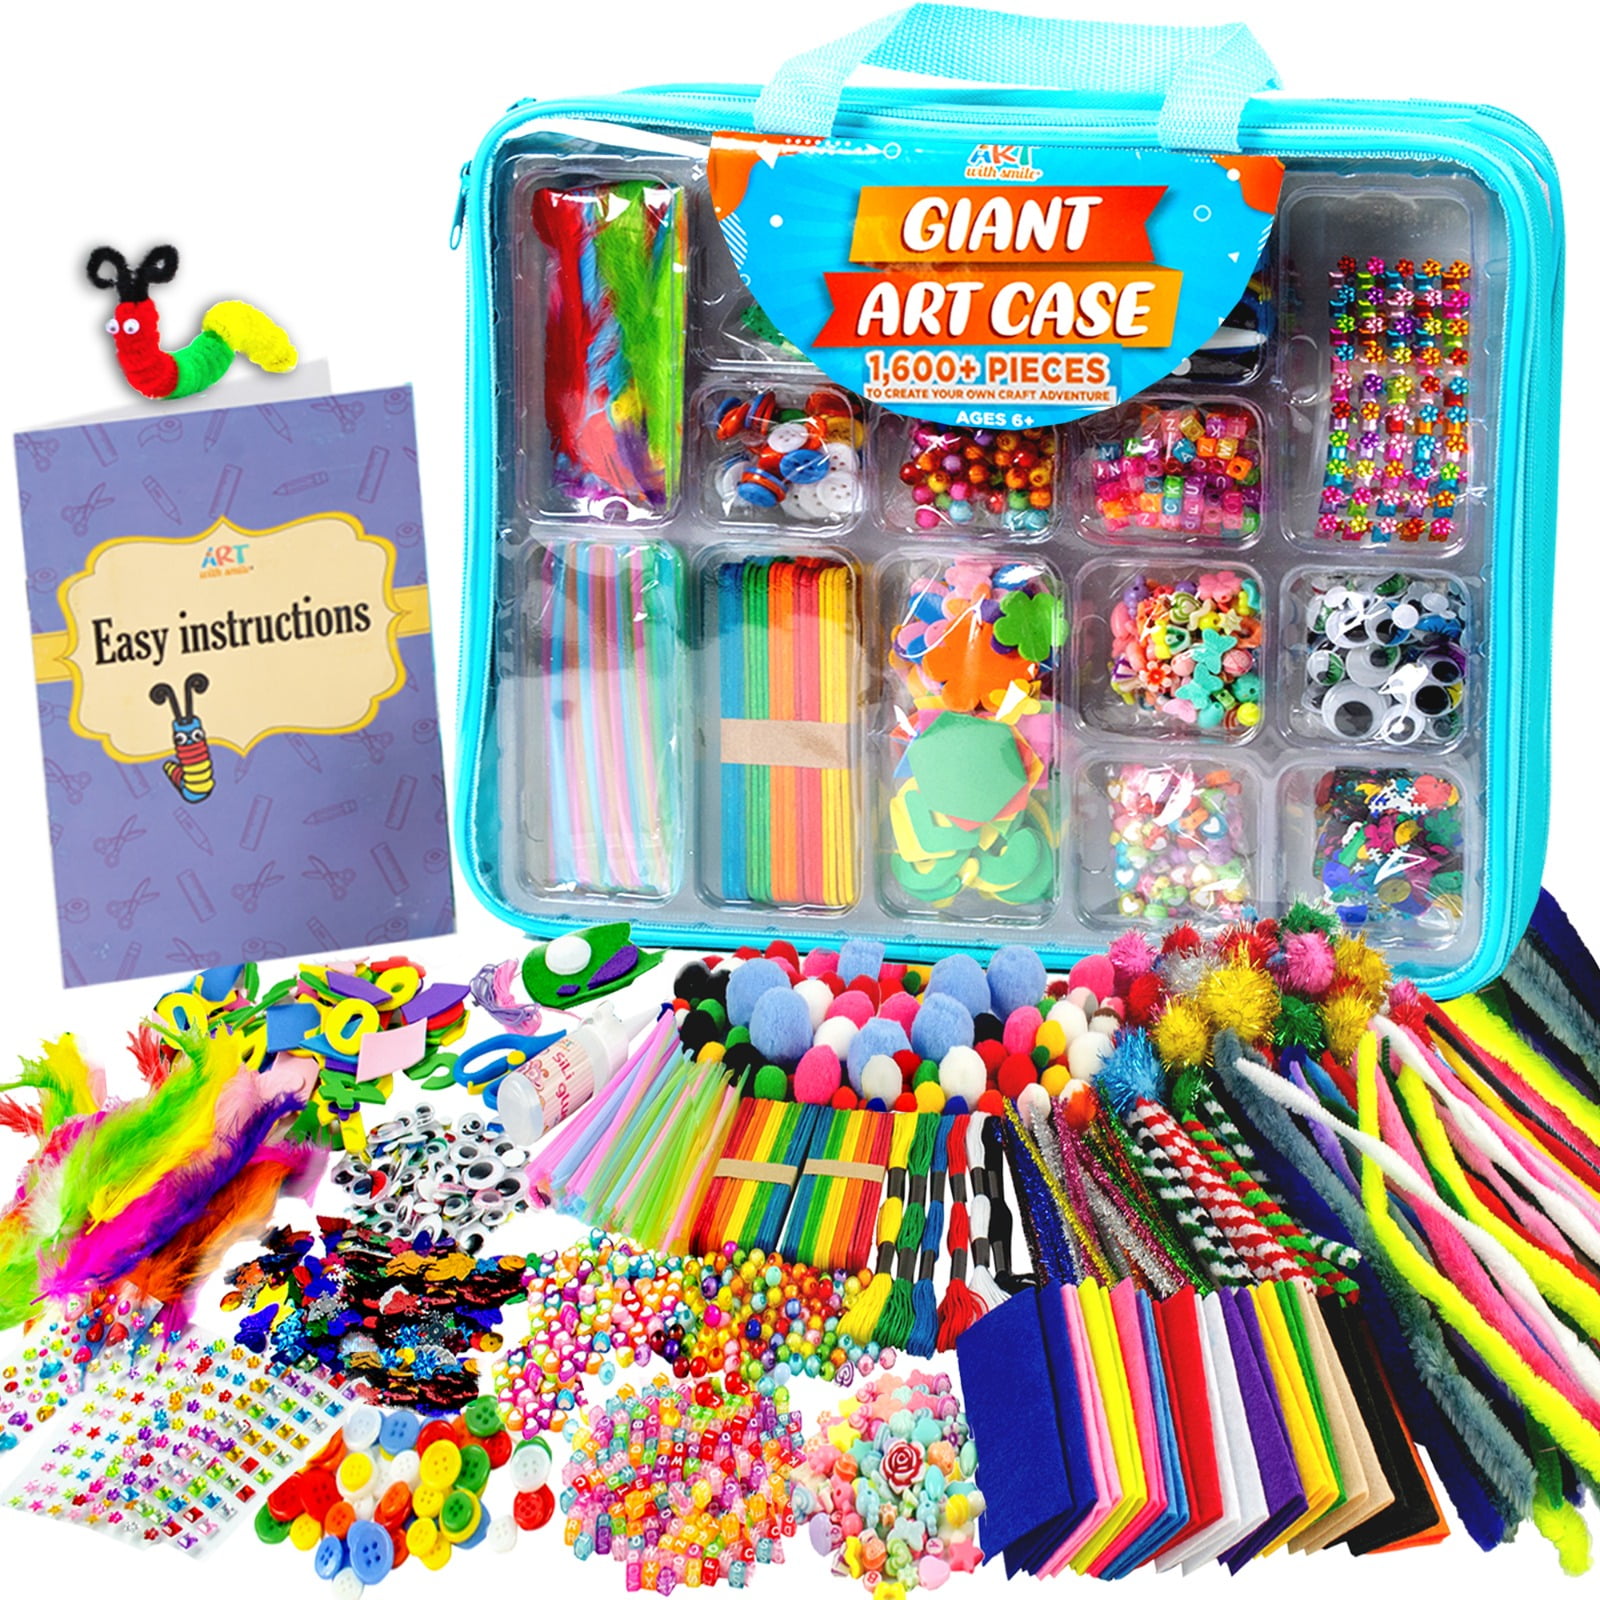 Adult Craft Giveaway: Tiny Art Kits - Clackamas County Arts Alliance